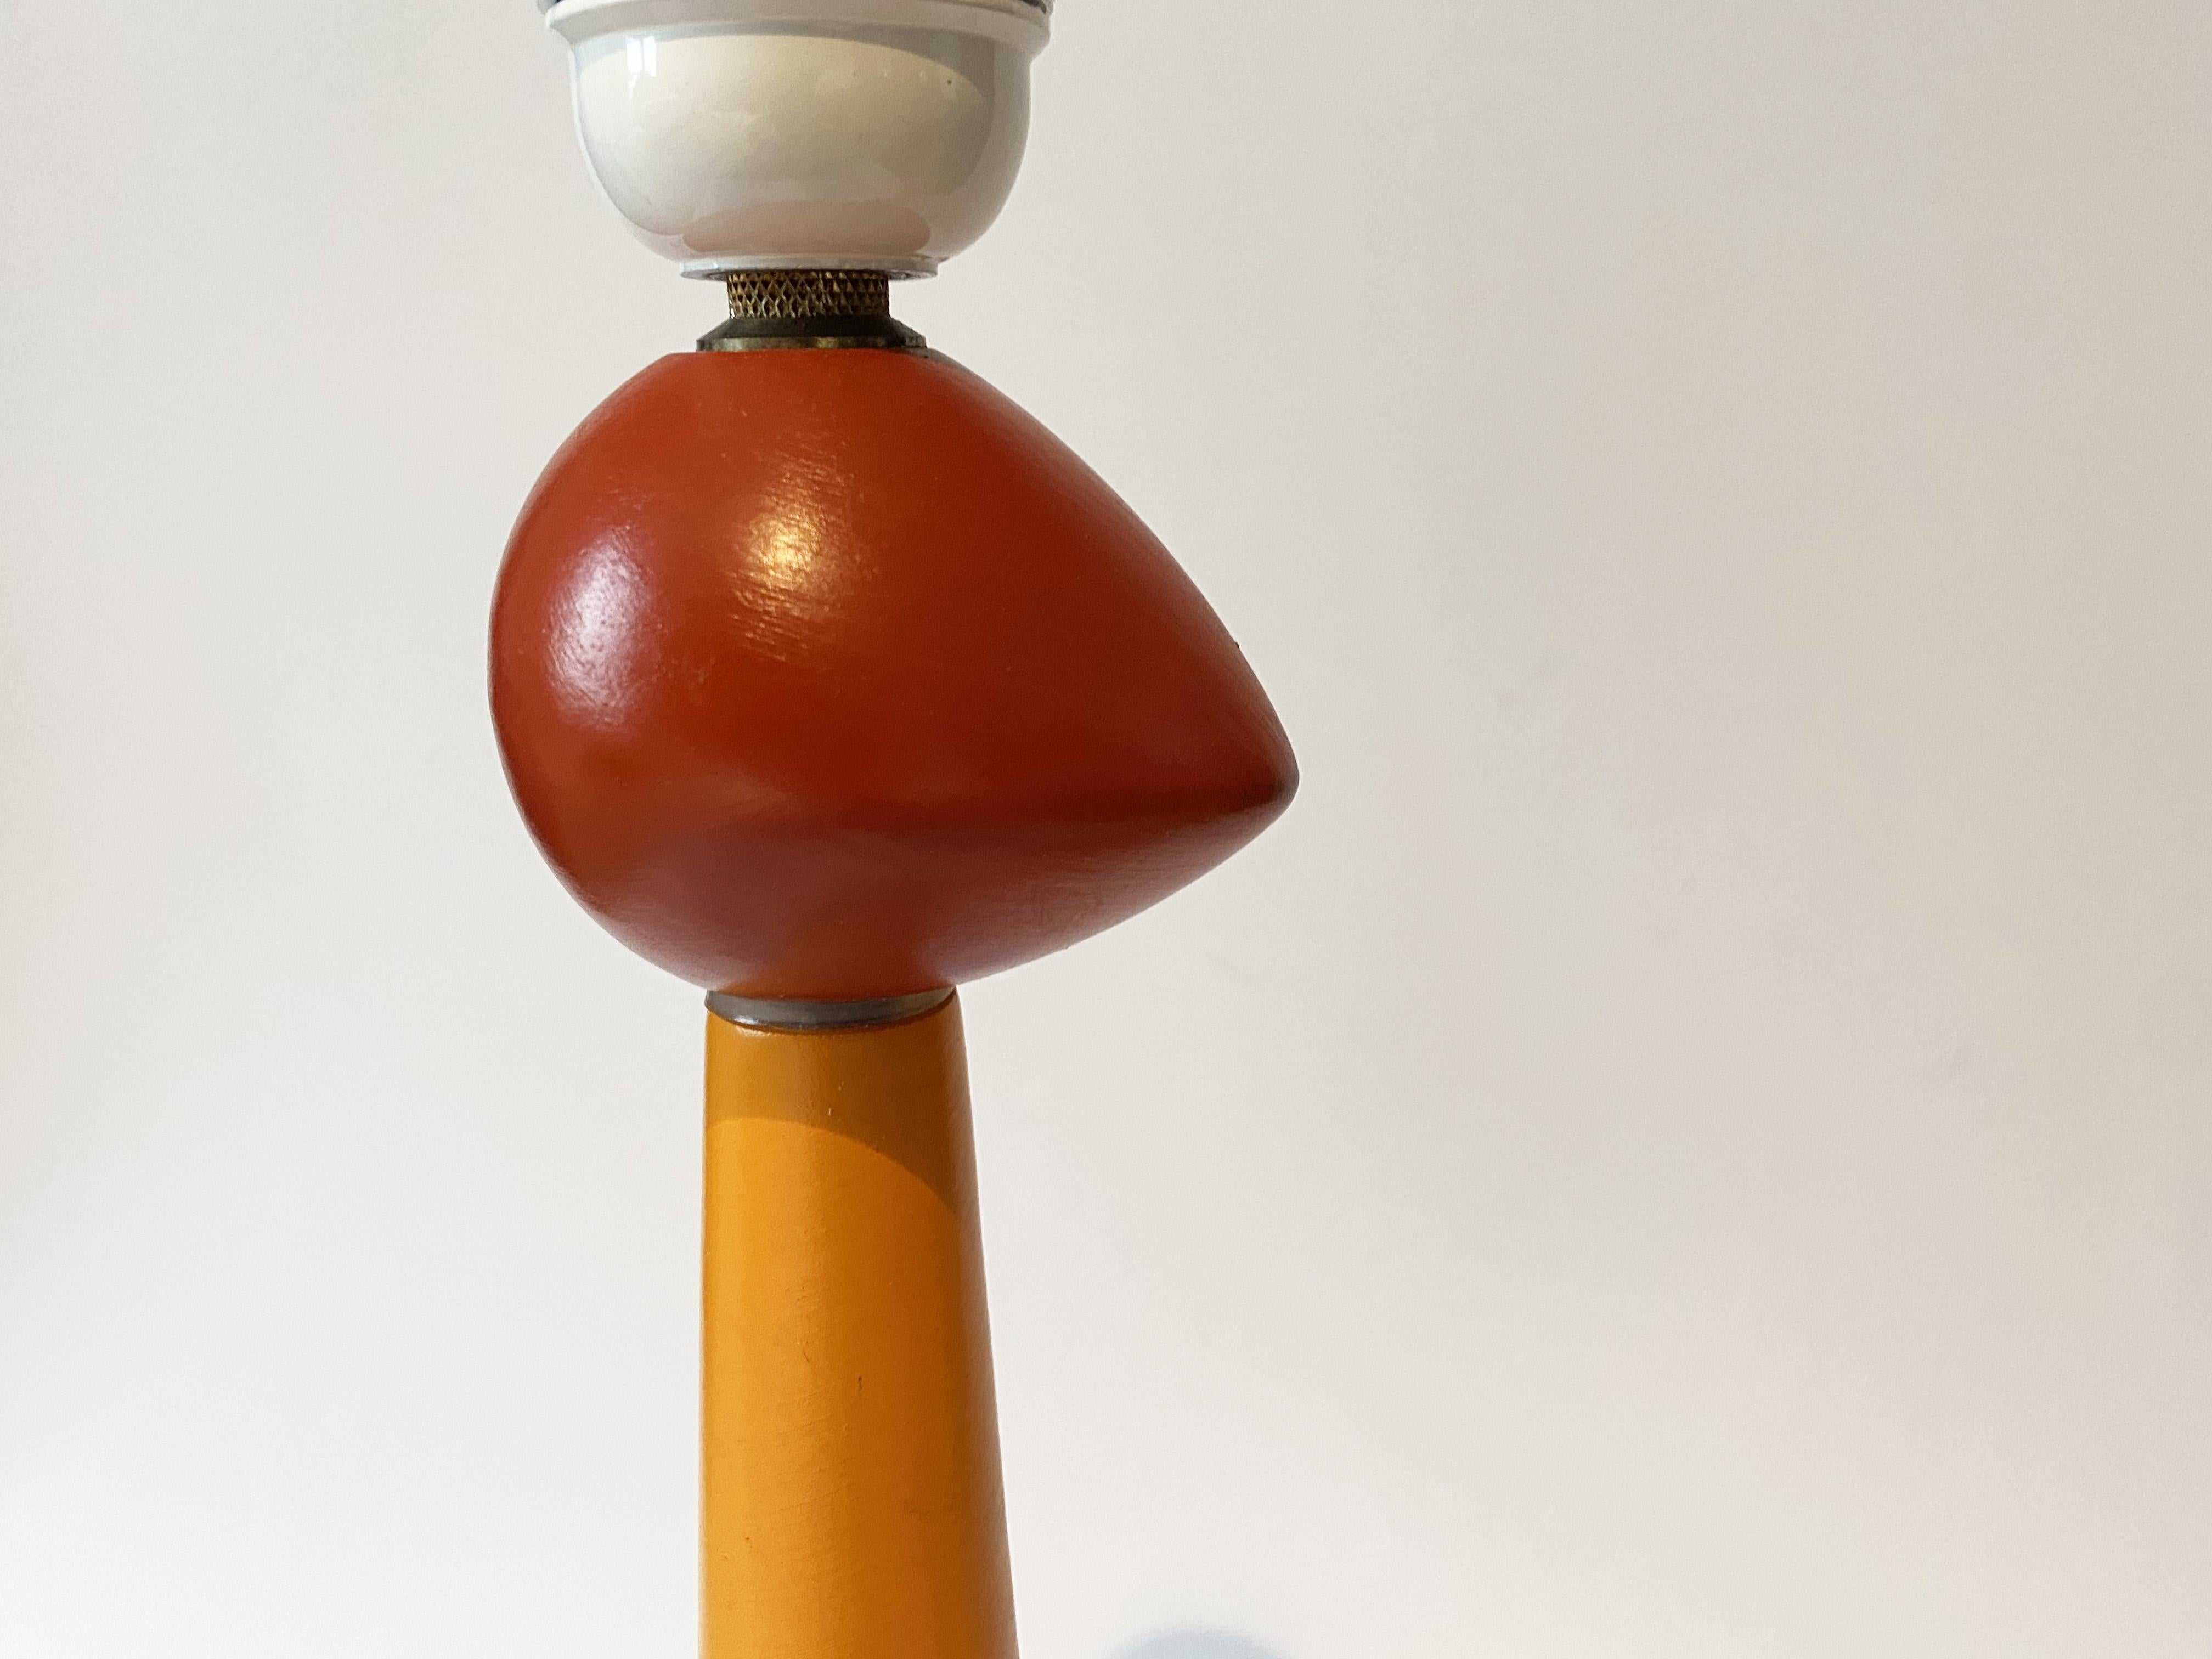 Post-Modern Postmodern Lamps in Ceramic, style of Memphis Milano or Olivier Villatte, 1980s.